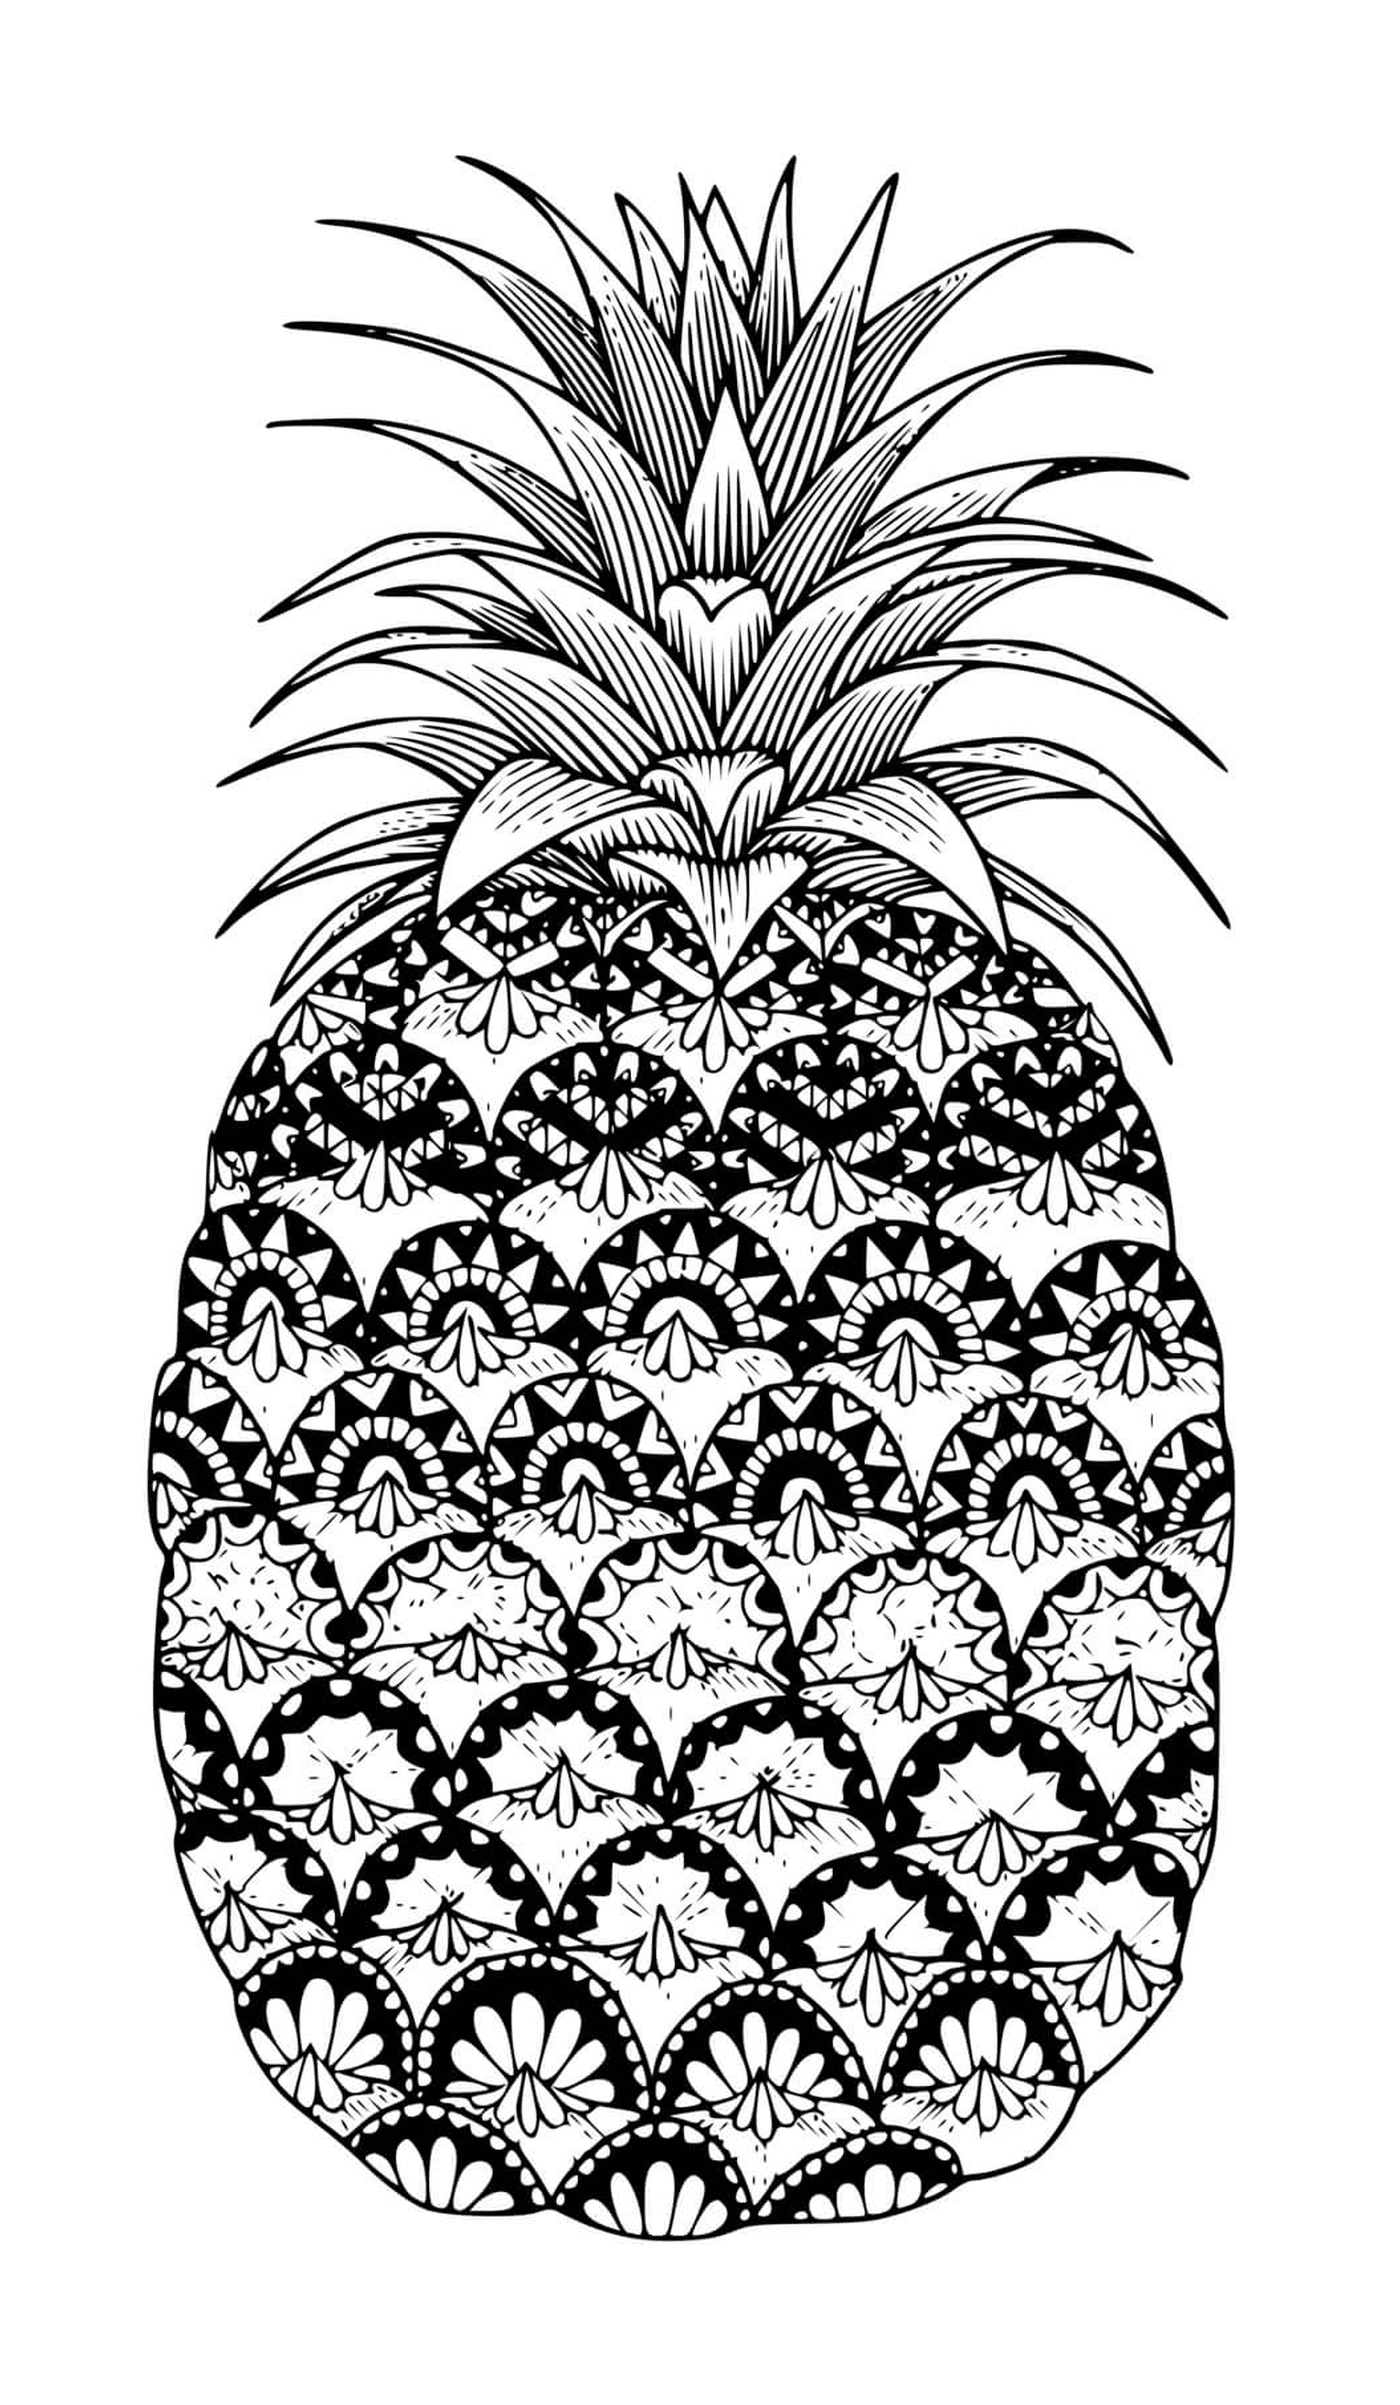  Un mandala zentango di un ananas di frutta 